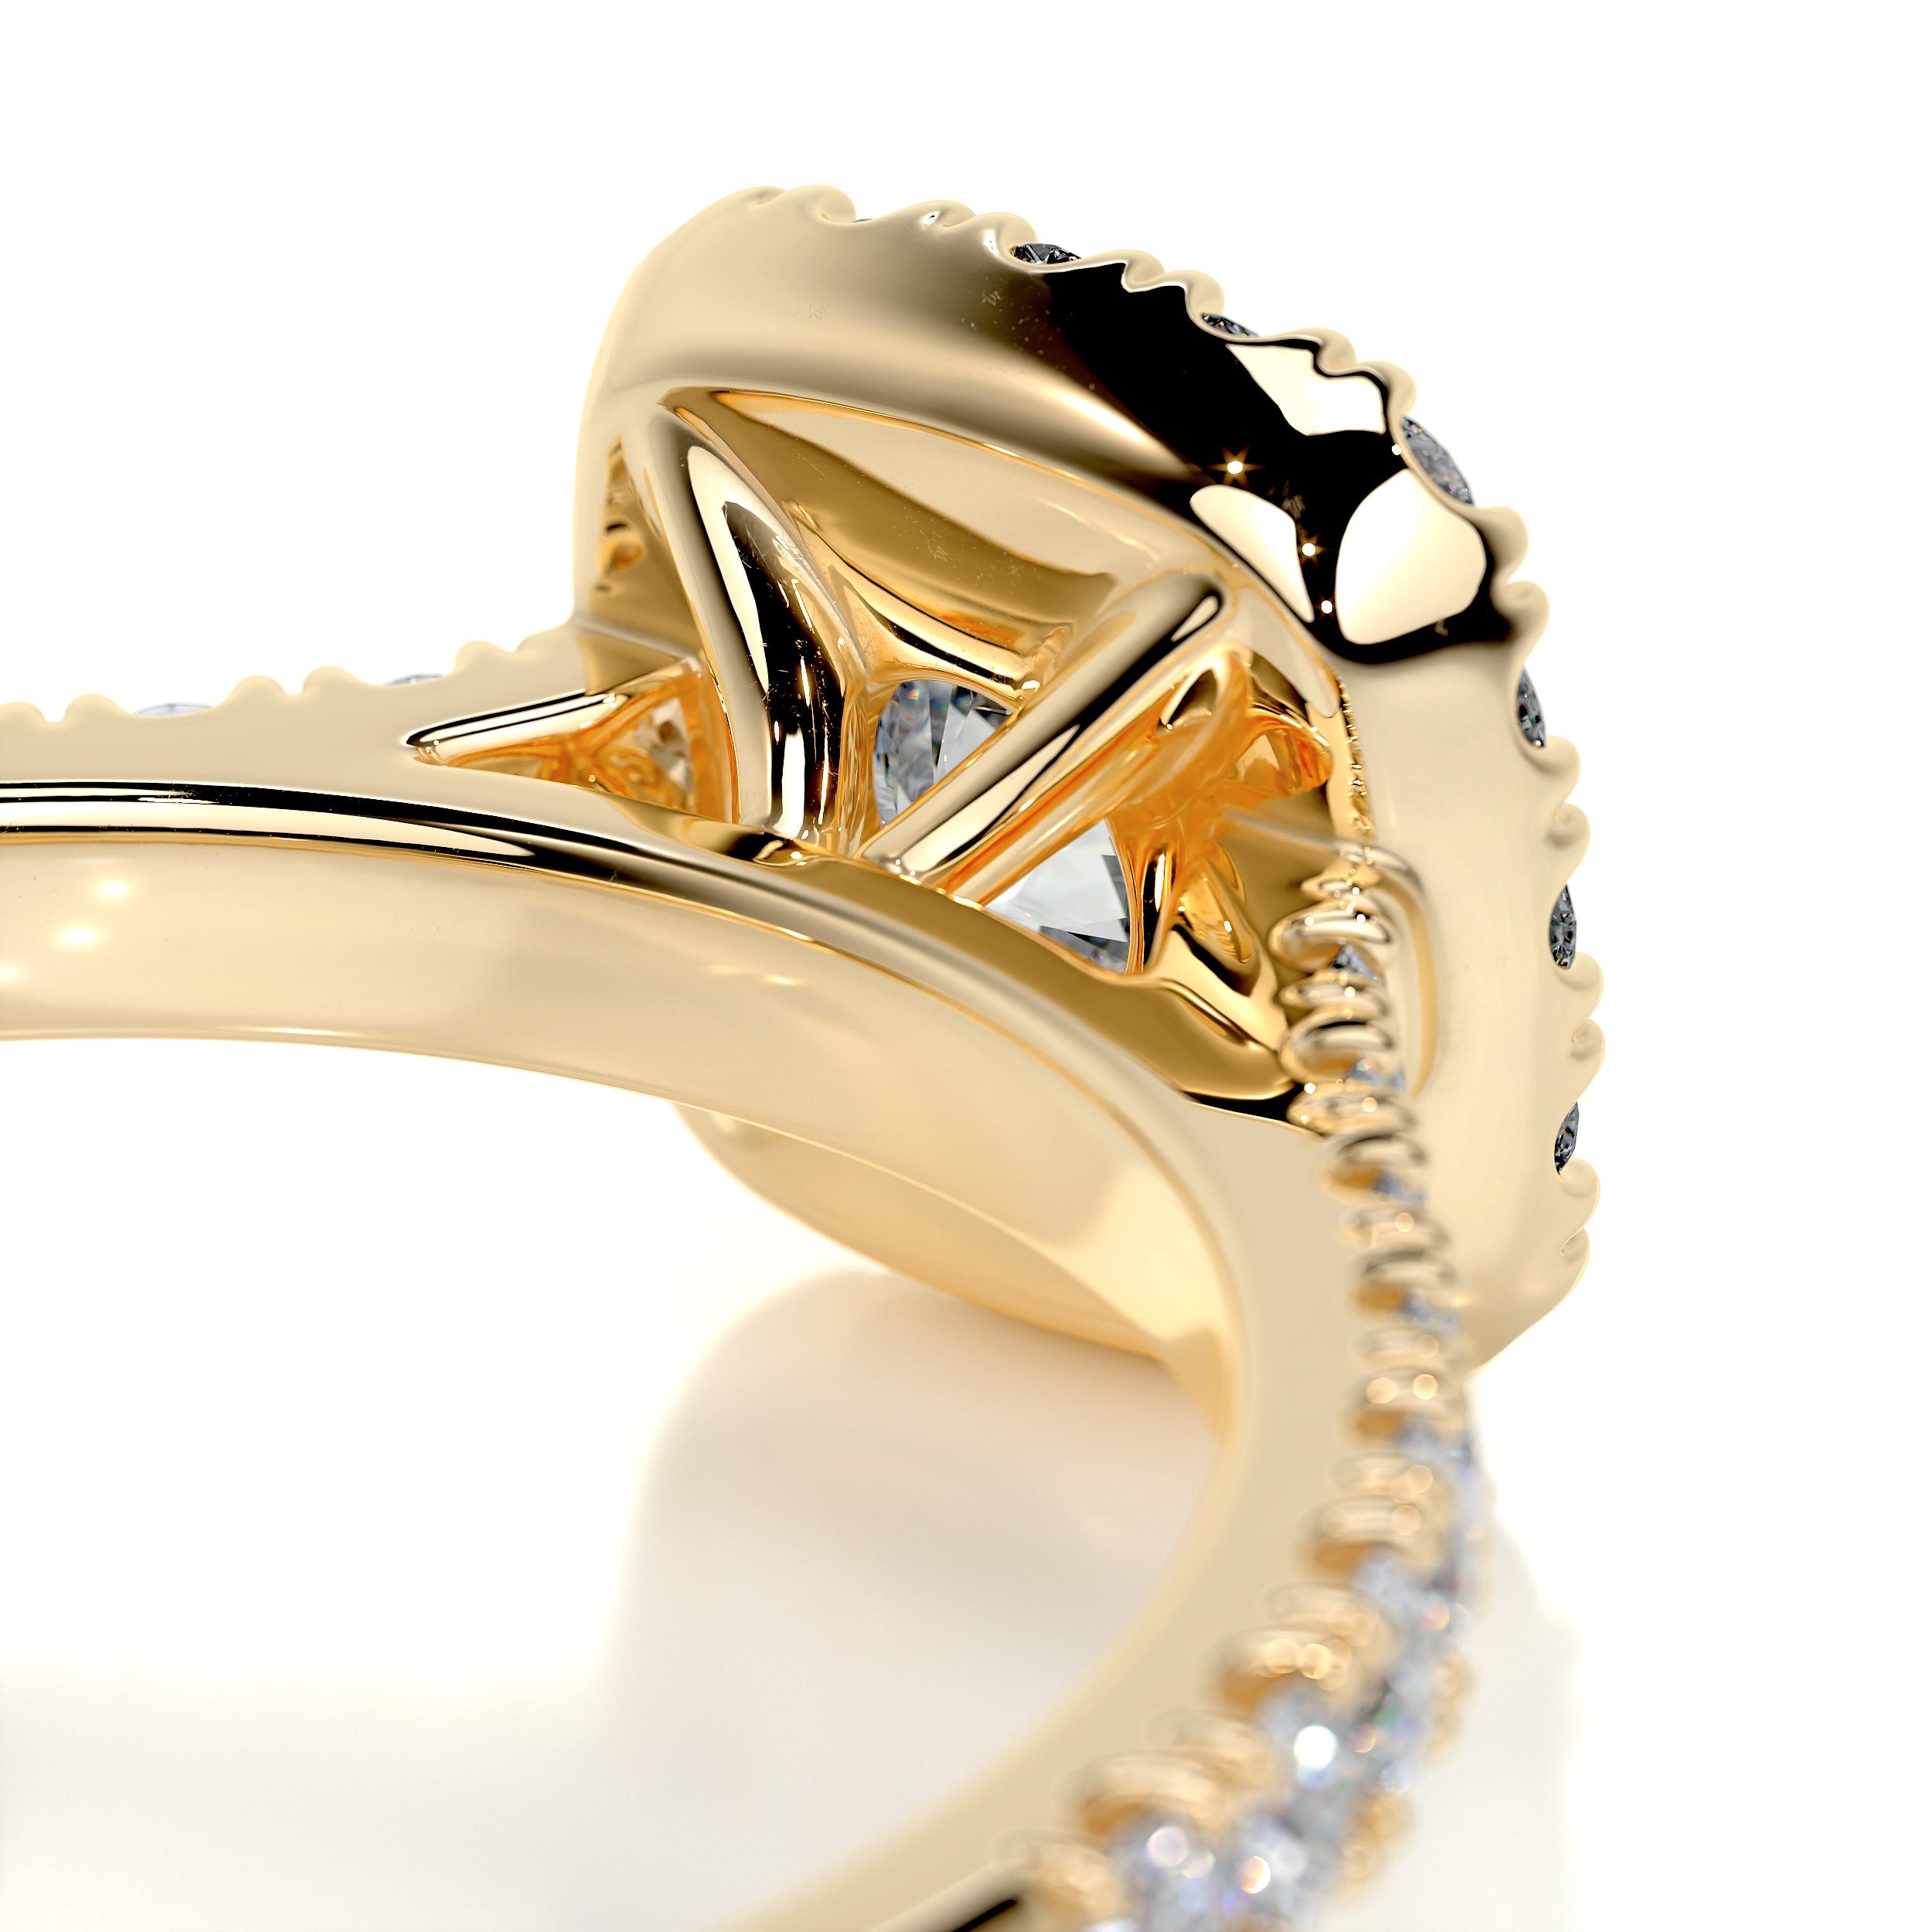 Claudia Diamond Engagement Ring   (0.70 Carat) -14K Yellow Gold (RTS)